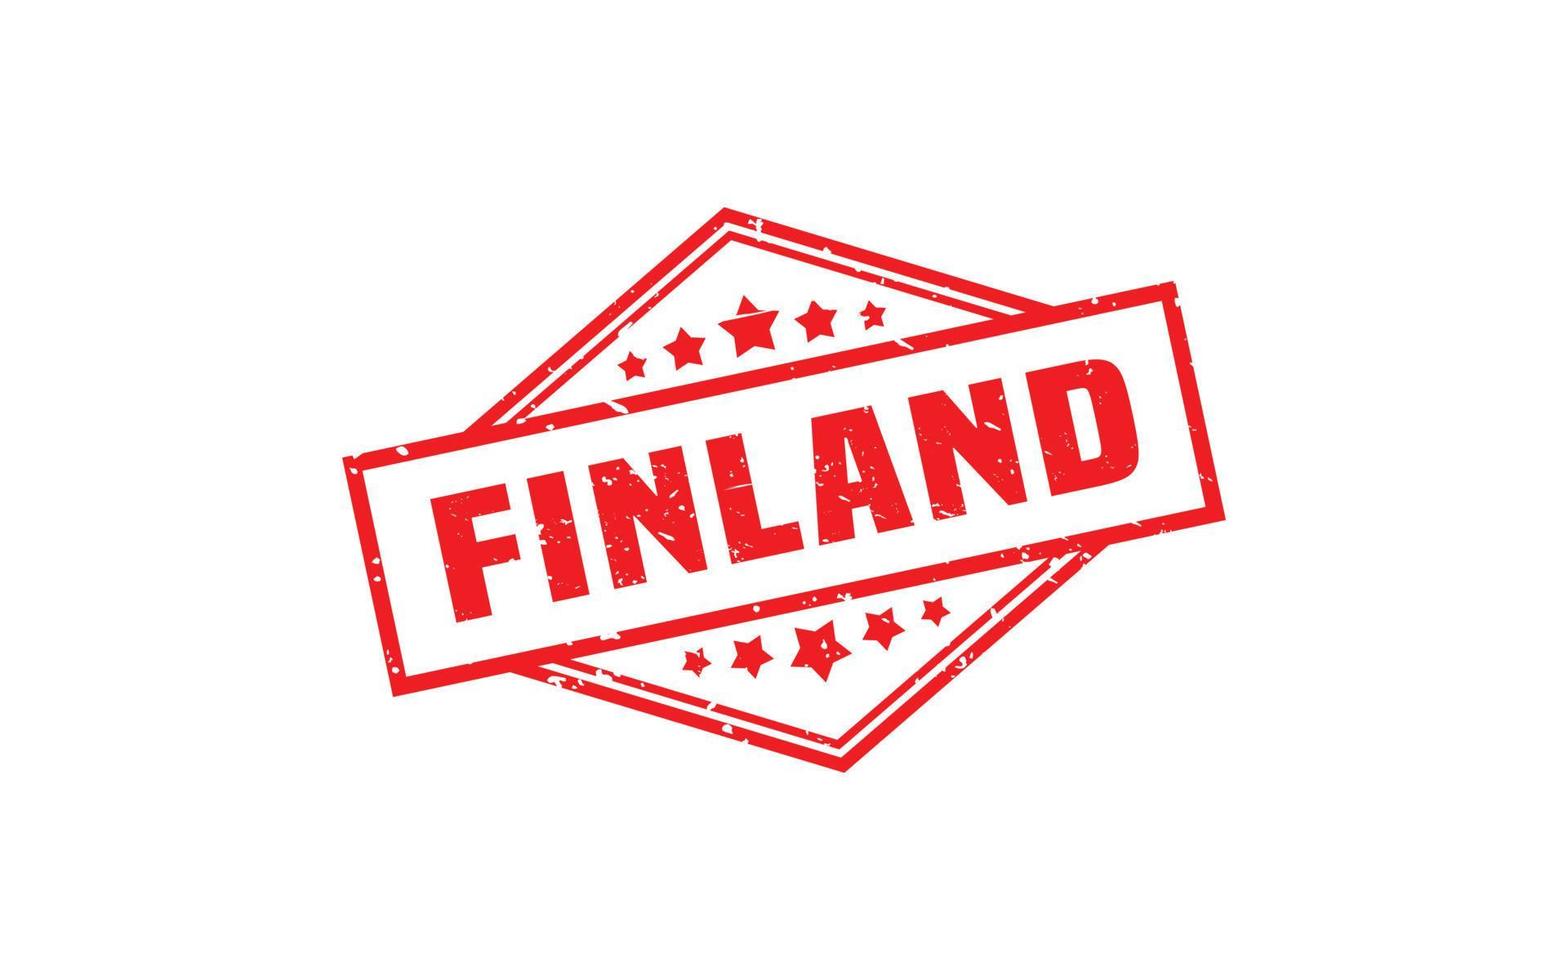 Finlândia carimbo de borracha com estilo grunge em fundo branco vetor